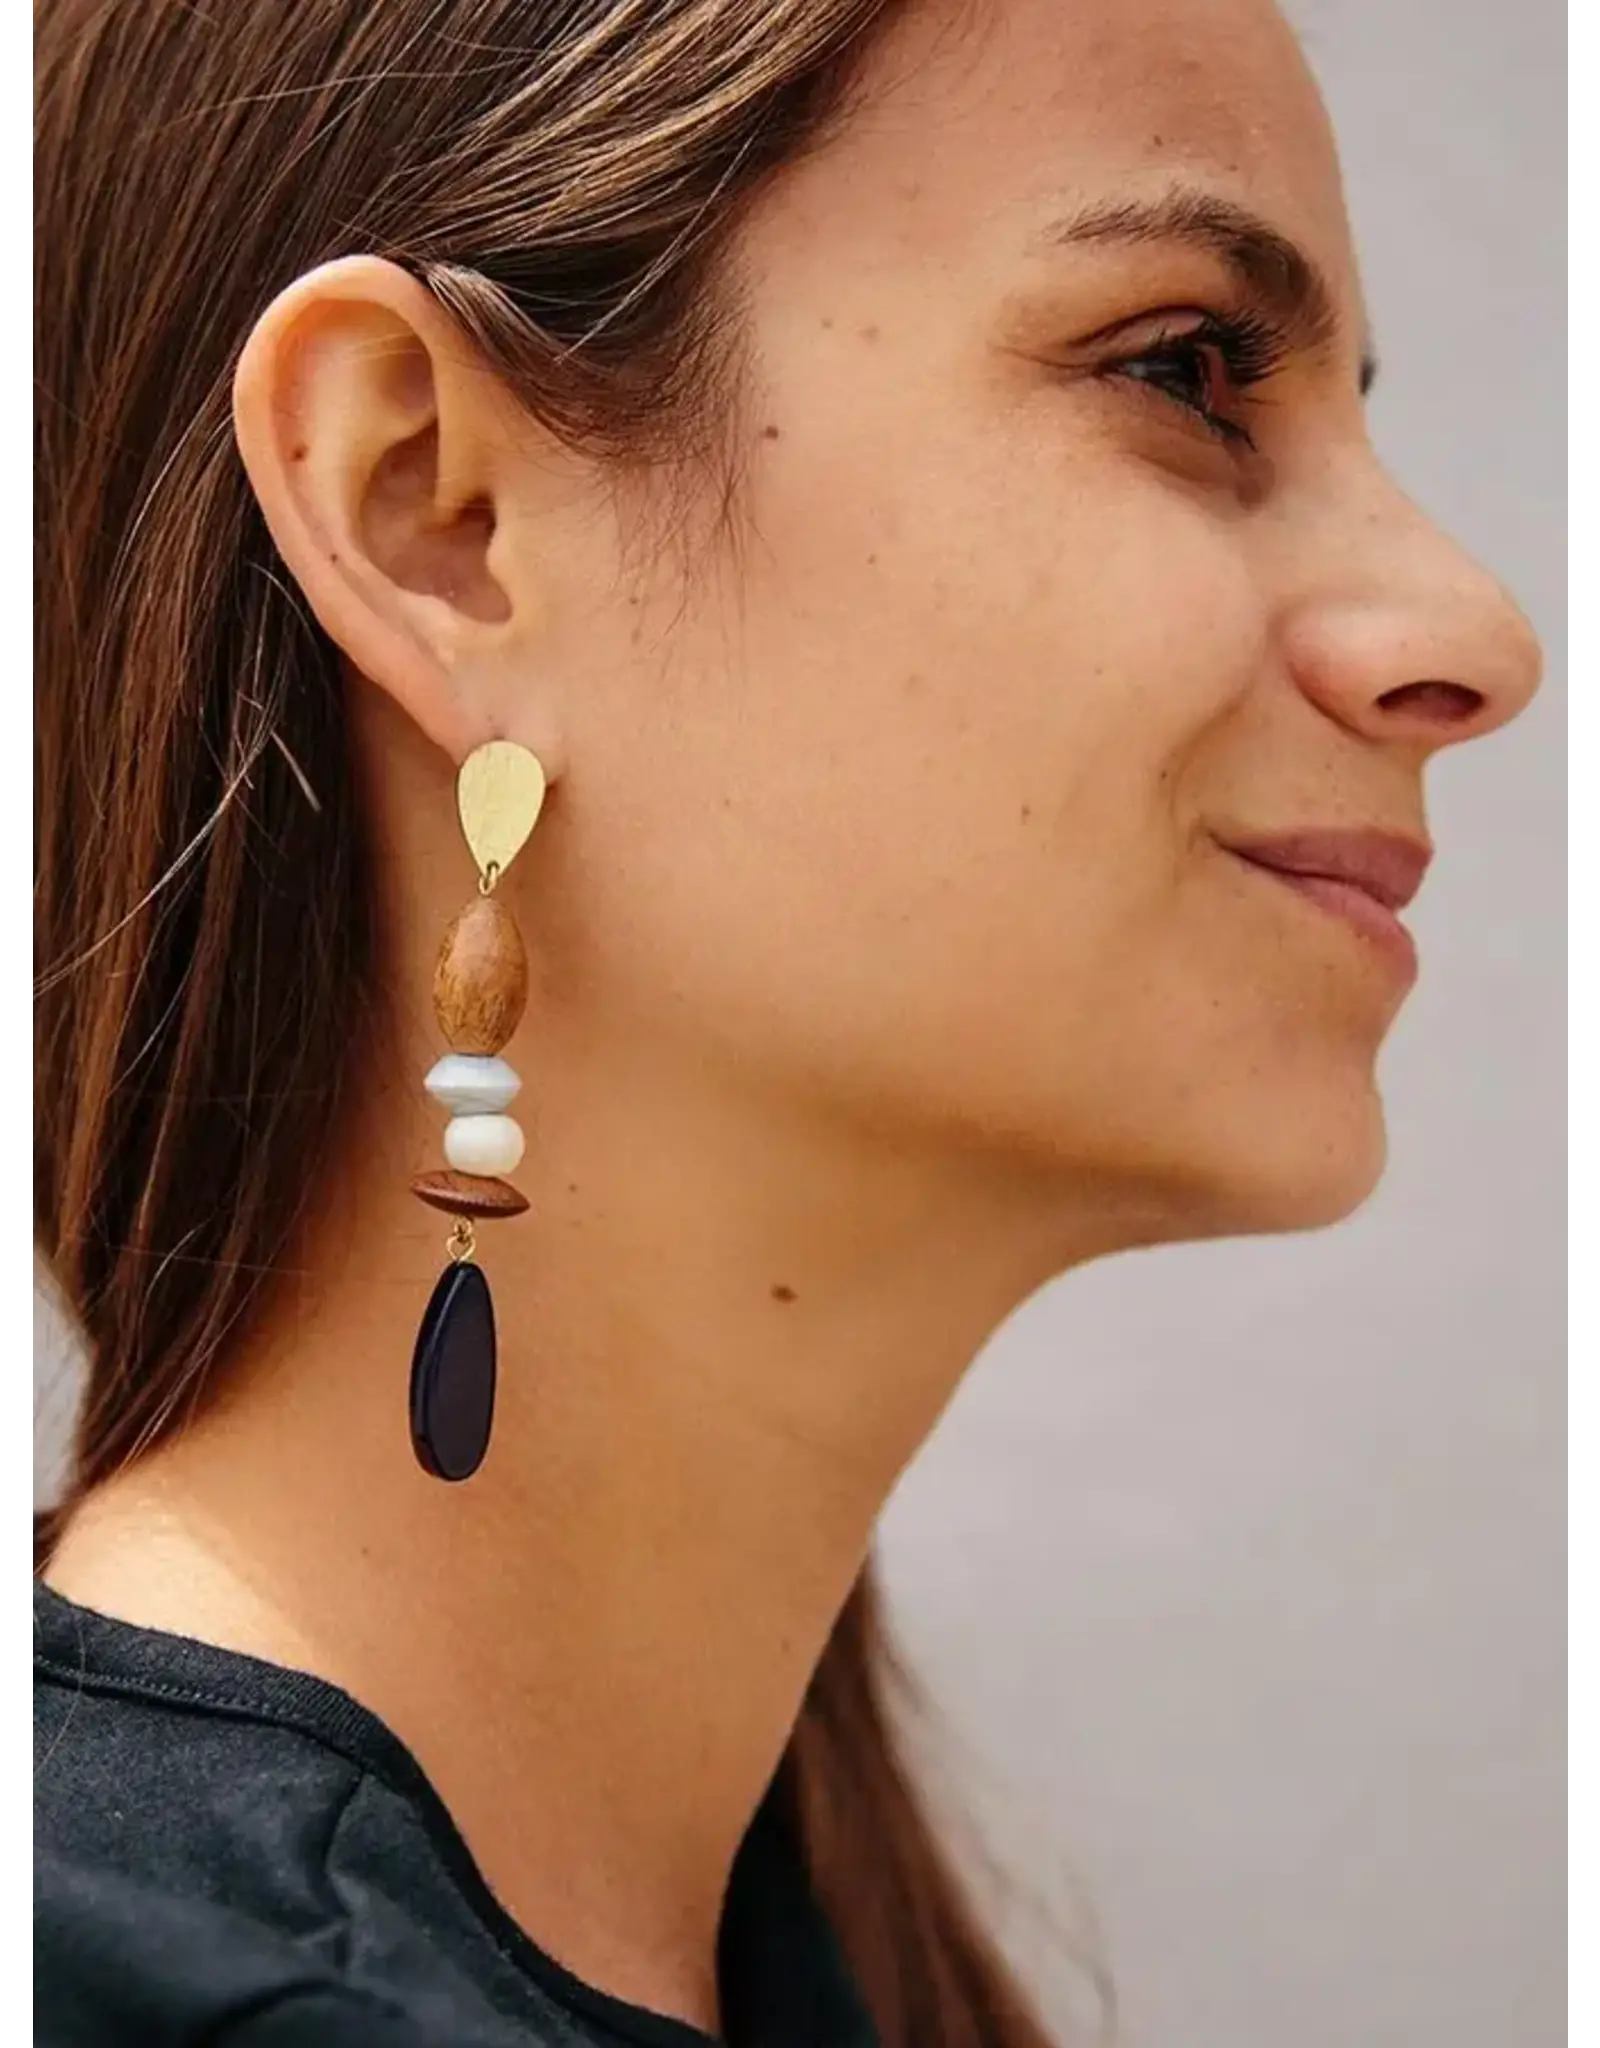 India Kolkata Earrings, India